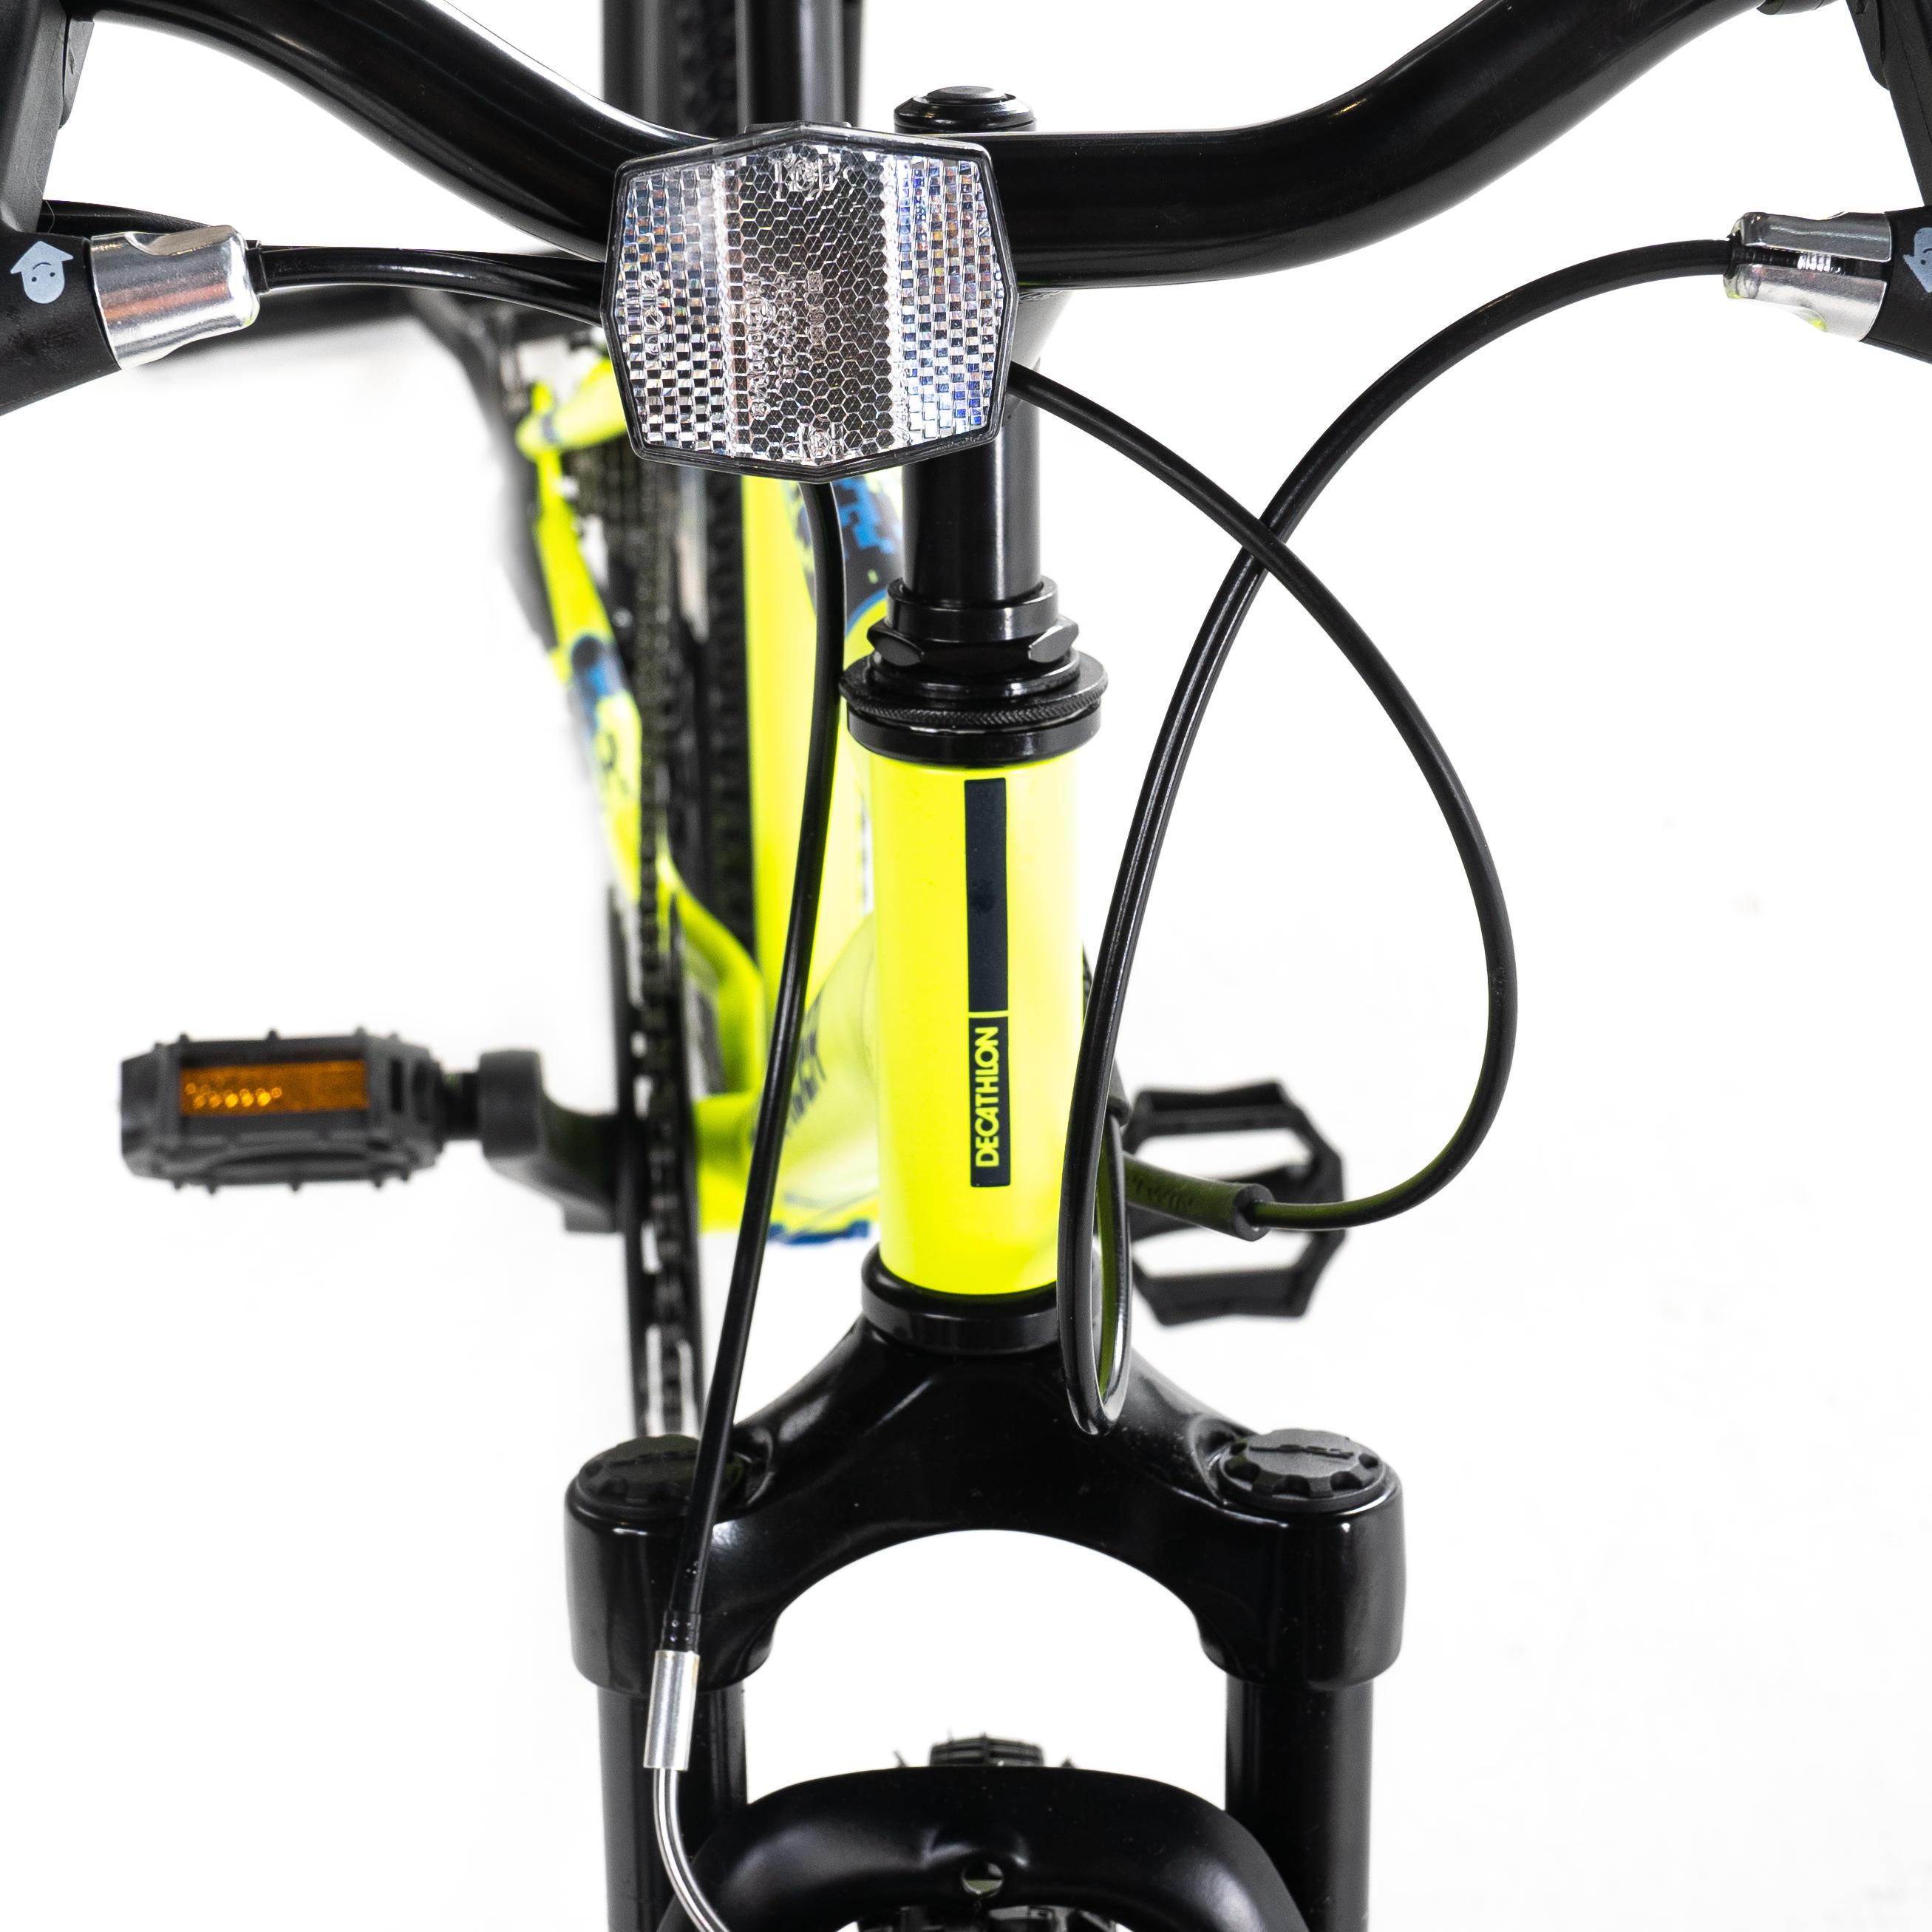 Kids' 20” Bike - ST 500 Yellow - BTWIN